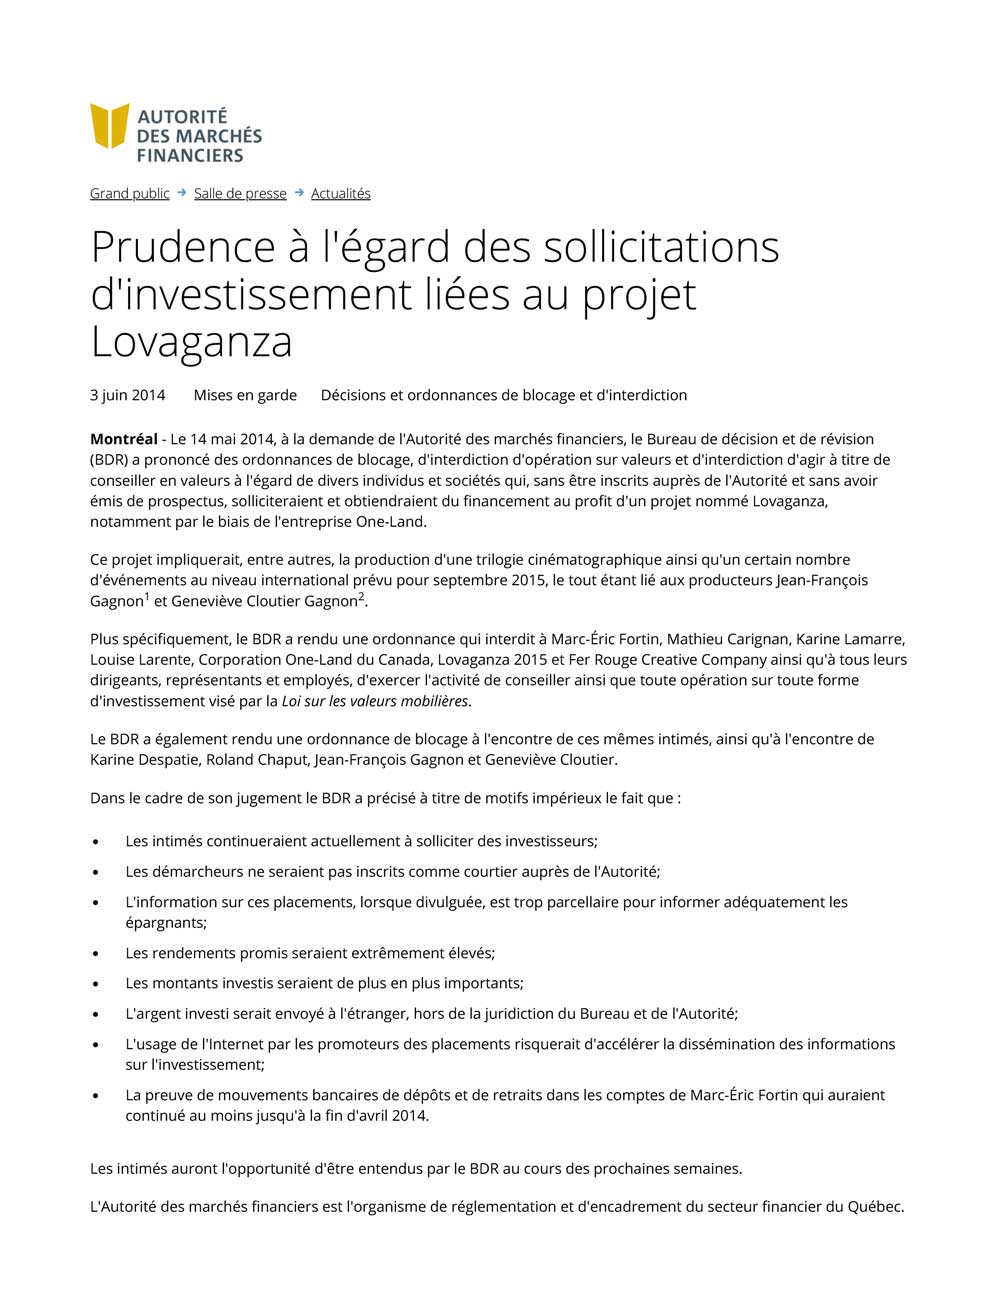 2014-06-03-prudence-a-l-egard-des-sollicitations-d-investissement-liees-au-projet-Lovaganza-AMF